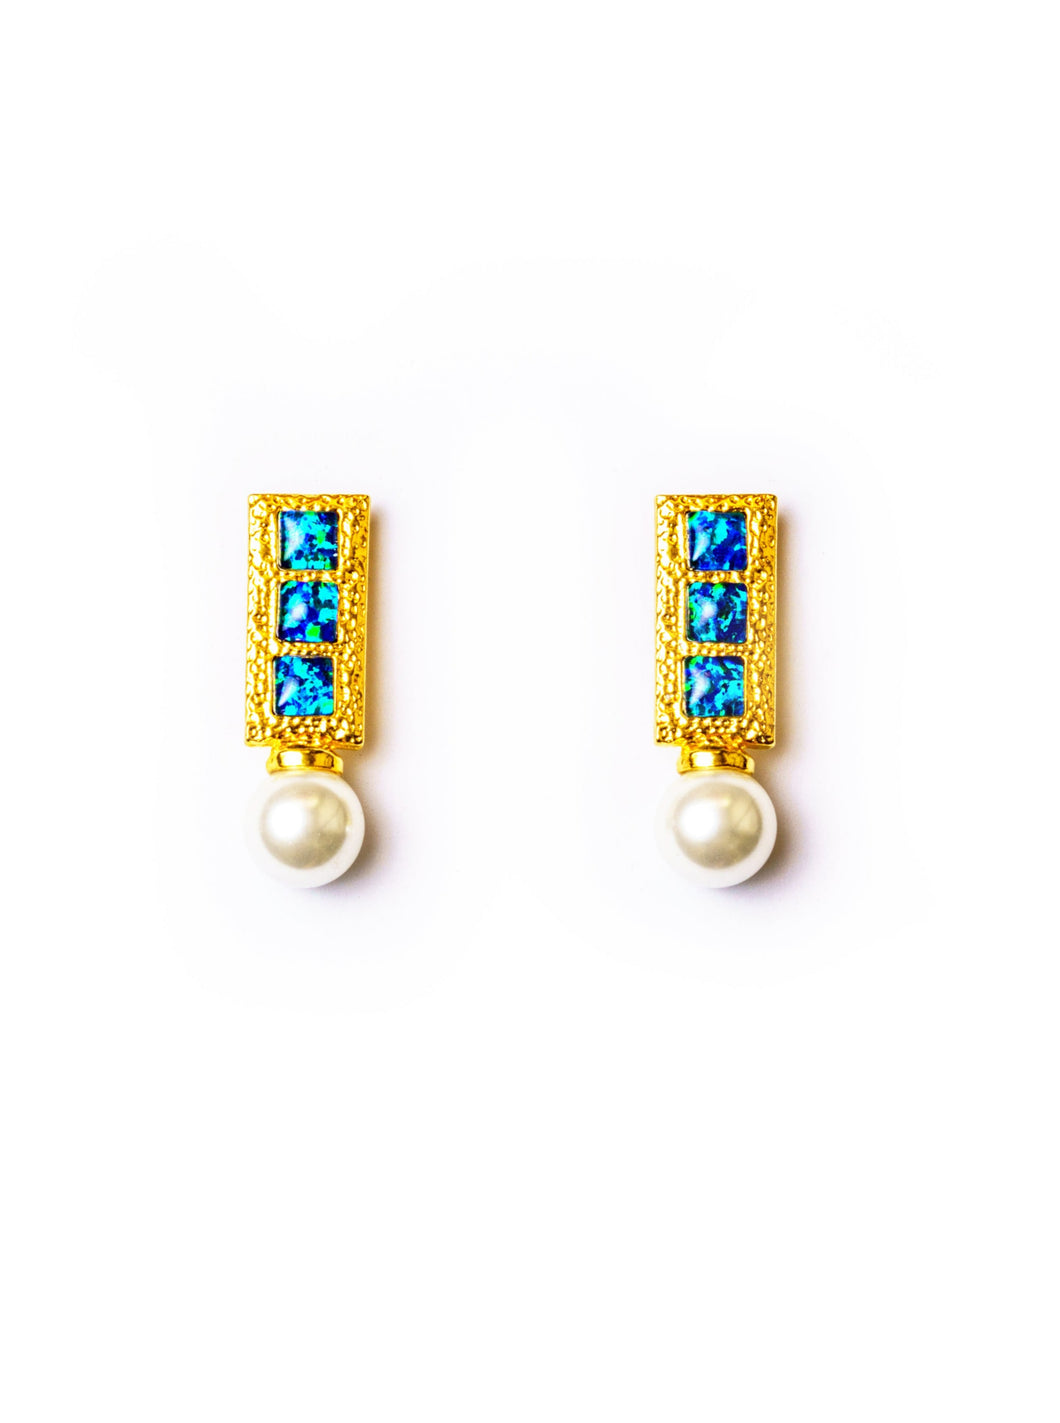 The Tangier Earrings